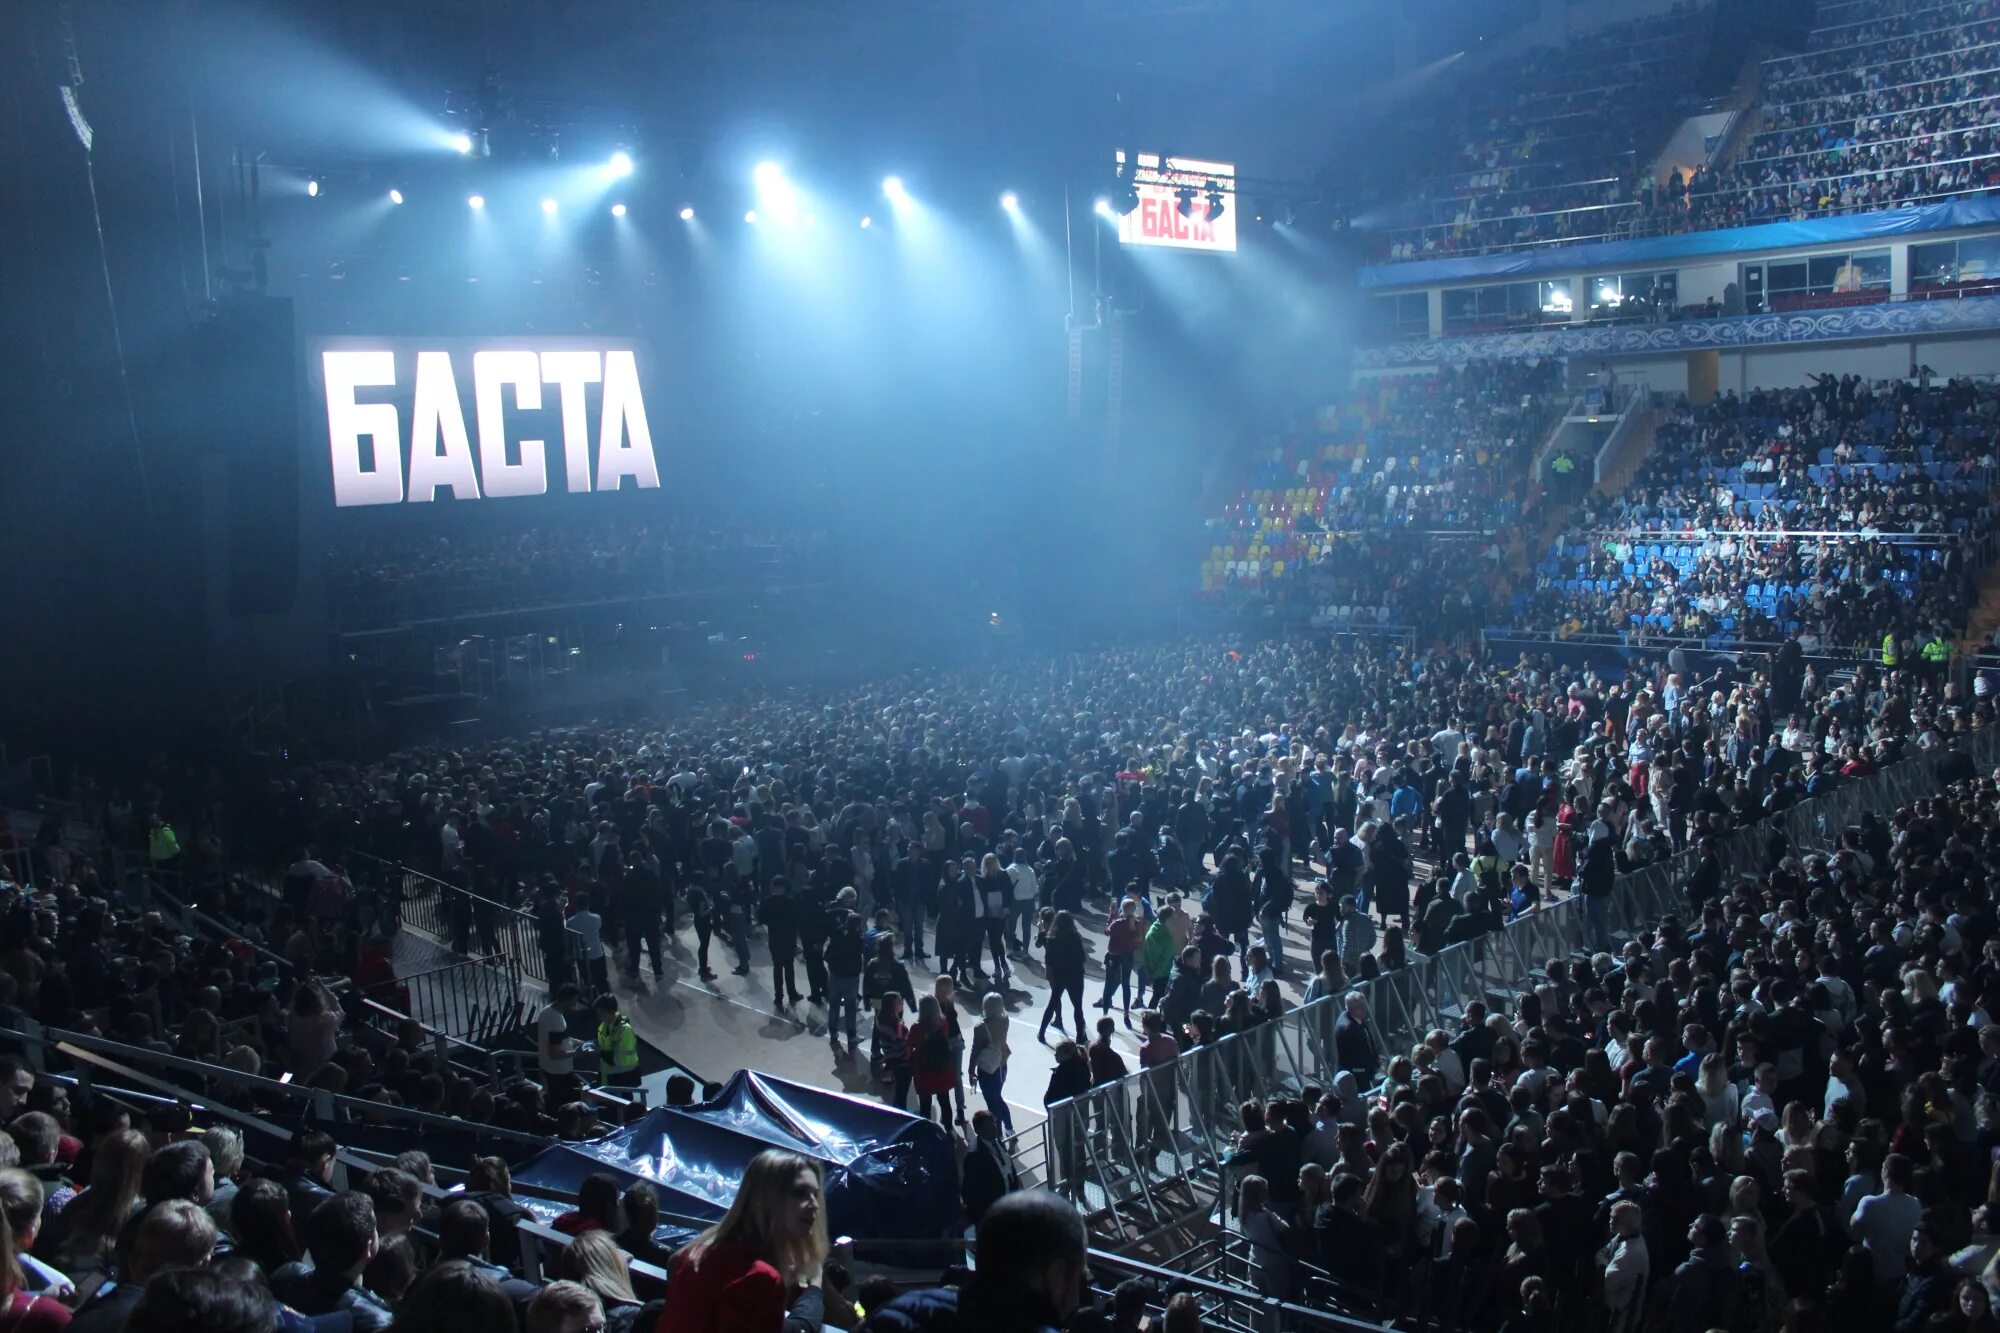 Баста концерт мегаспорт. Мегаспорт концерт Баста. Мегаспорт Арена Москва концерт. Мегаспорт Арена Баста. ДС Мегаспорт концерт.